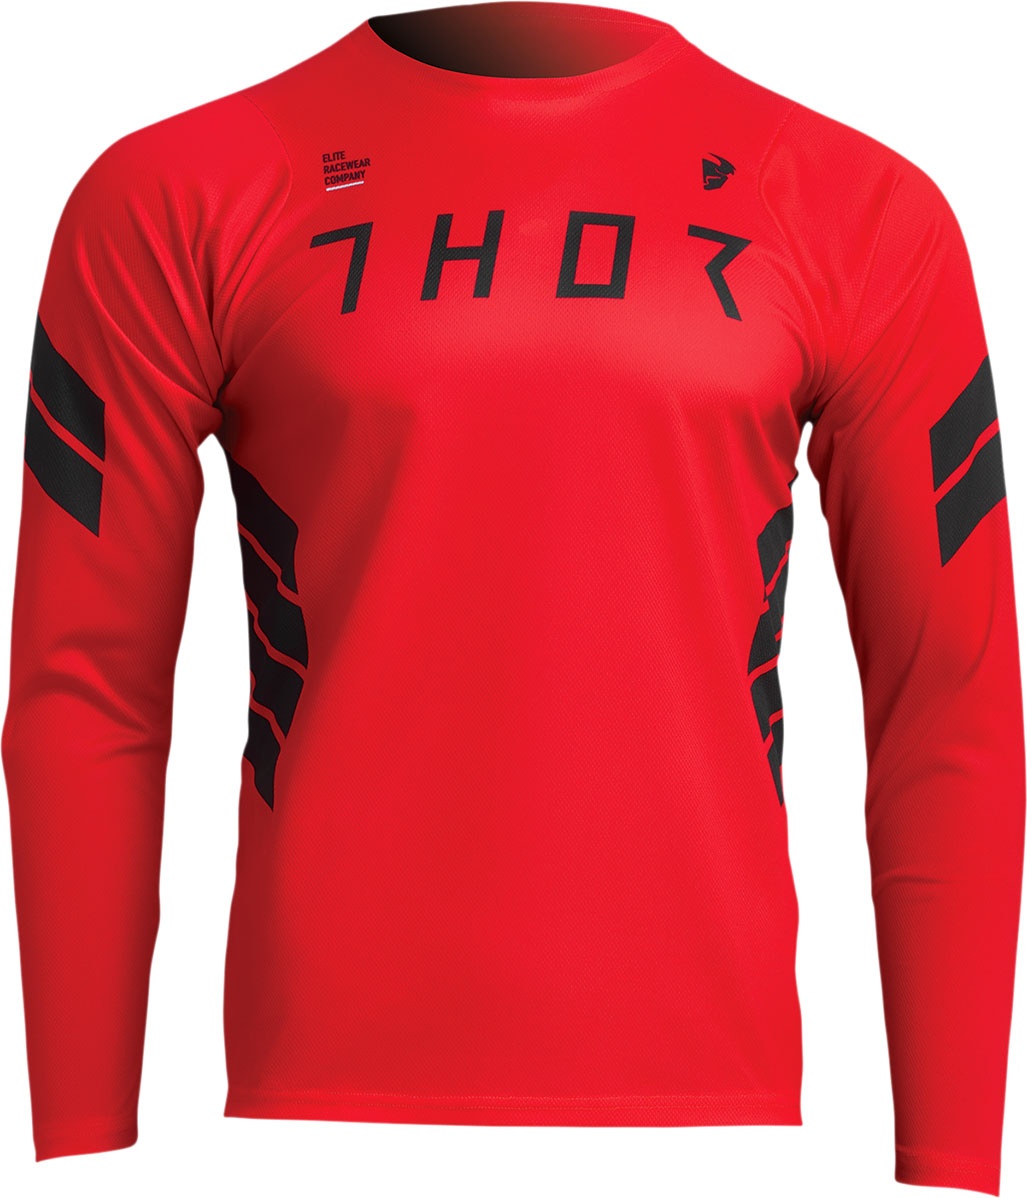 Thor Assist Sting S22, jersey - Rouge/Noir - M